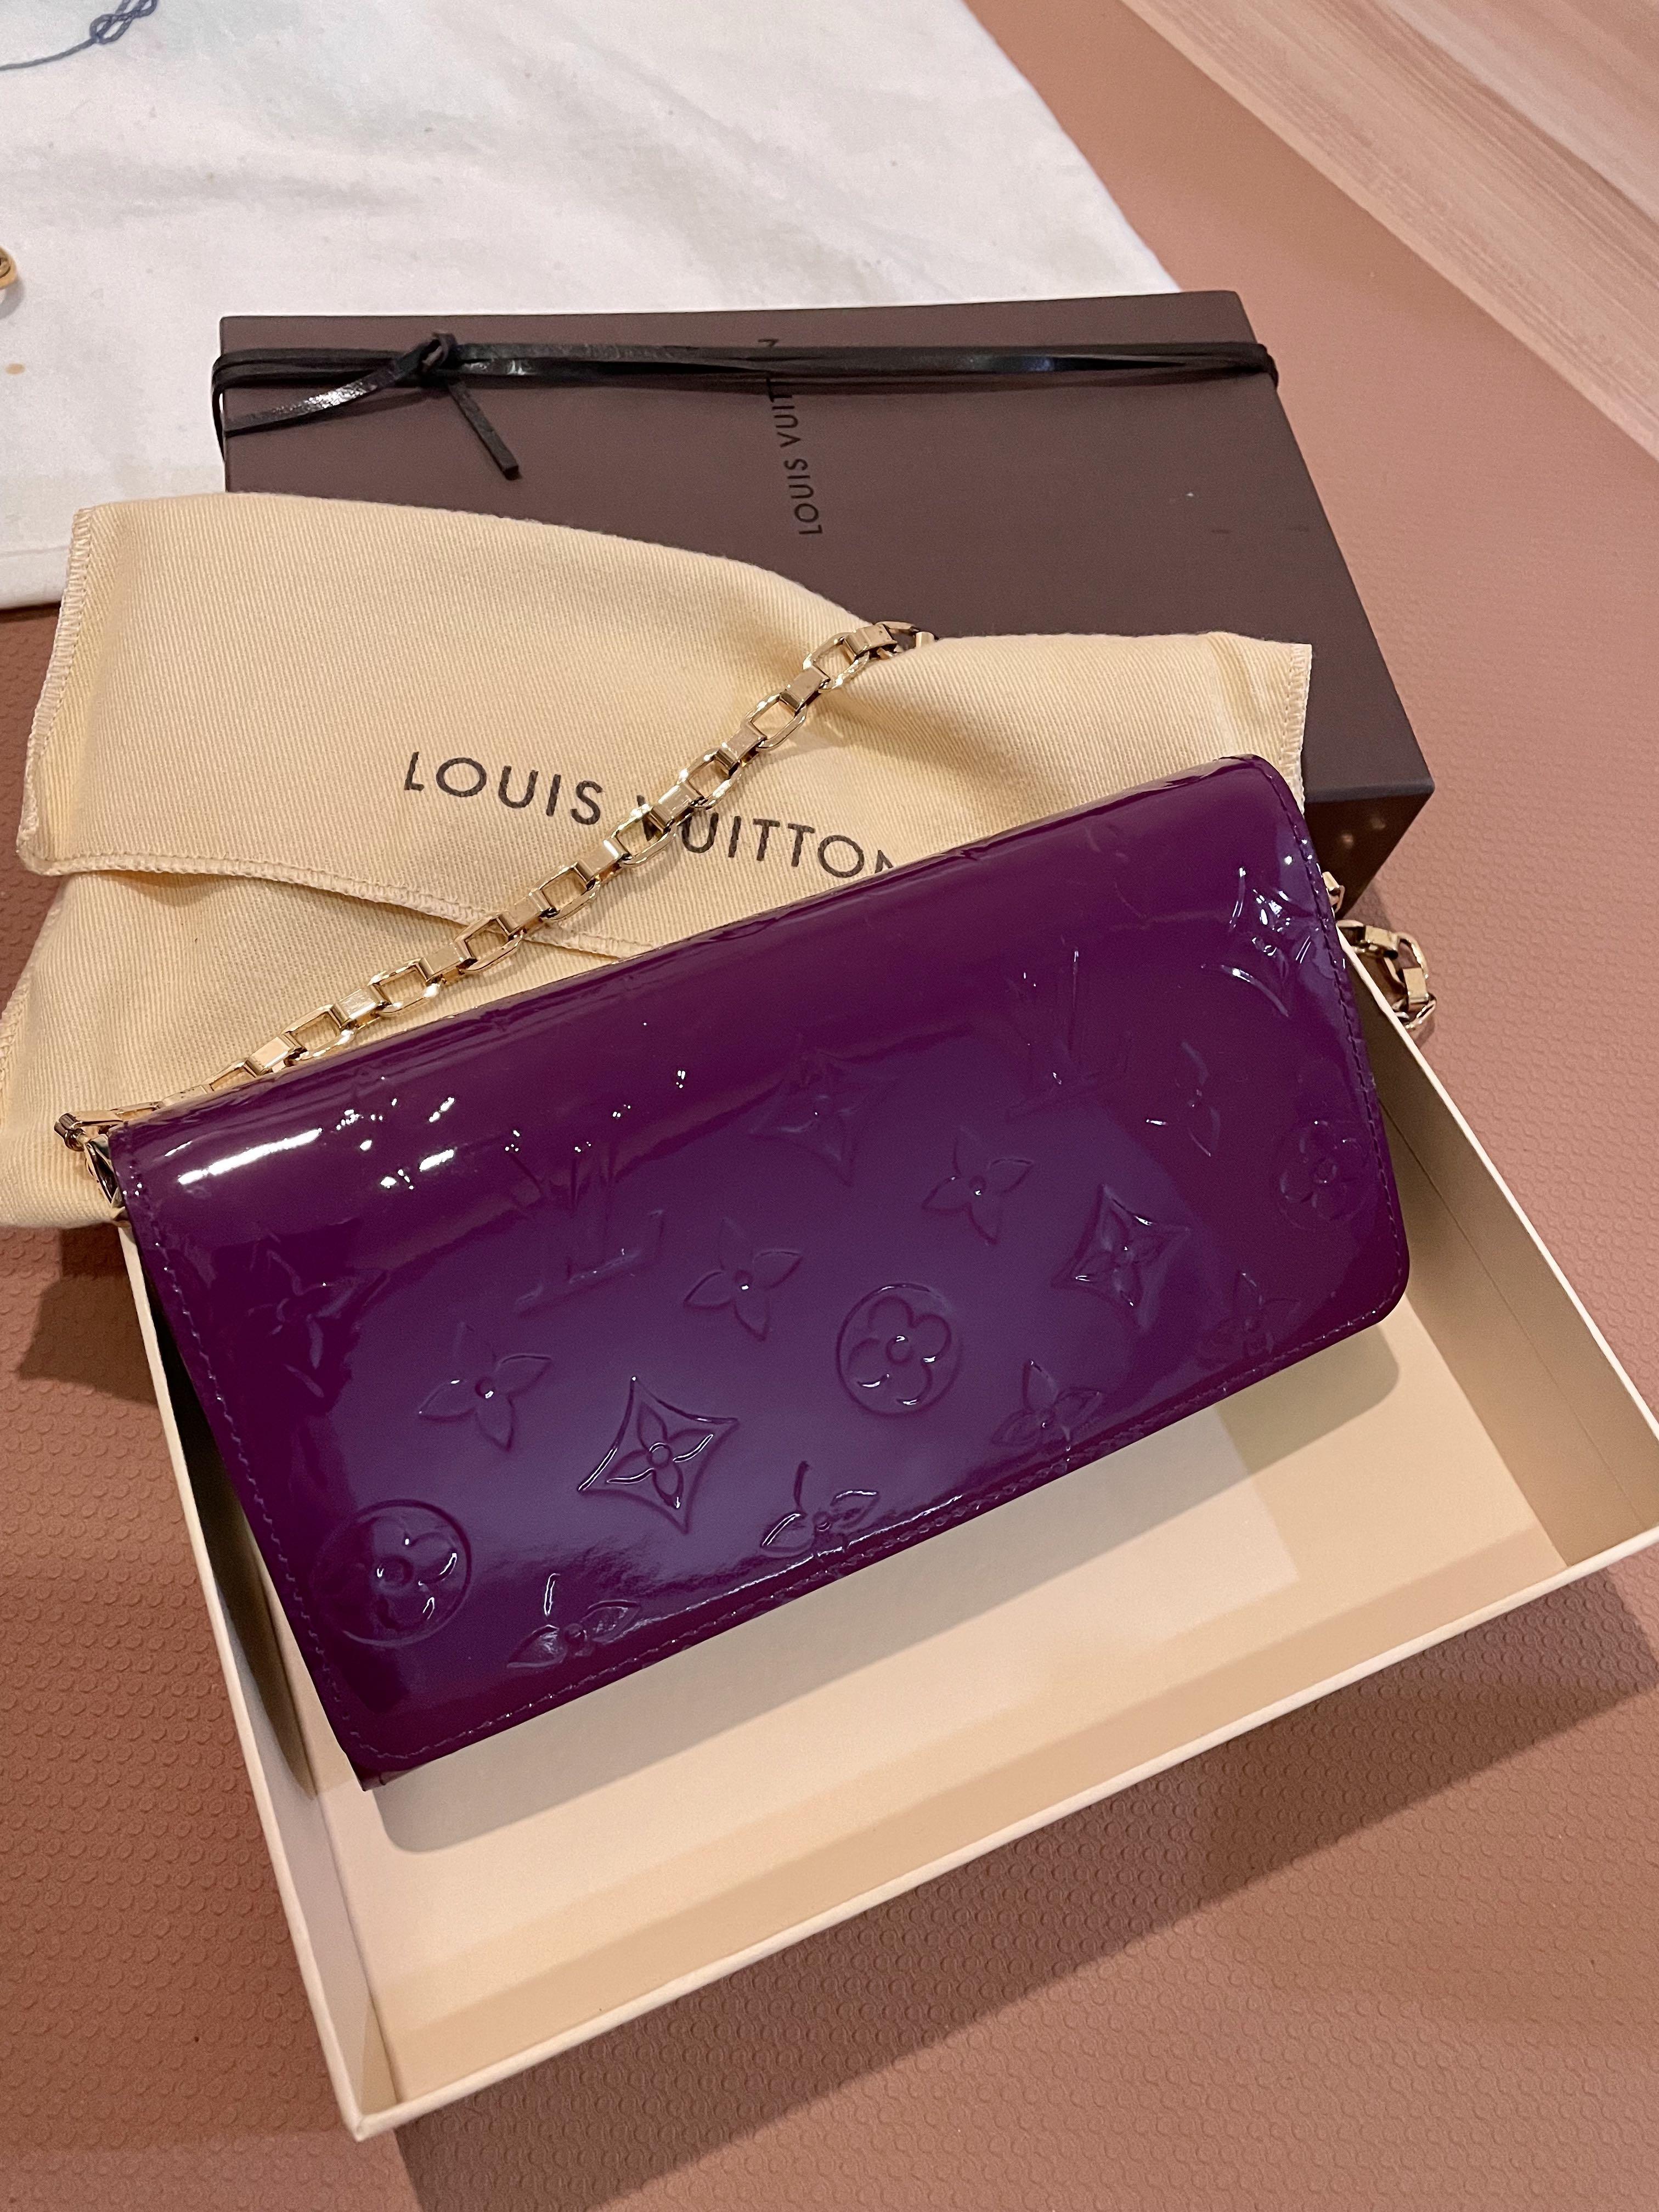 Chi tiết 66+ về louis vuitton purple wallet